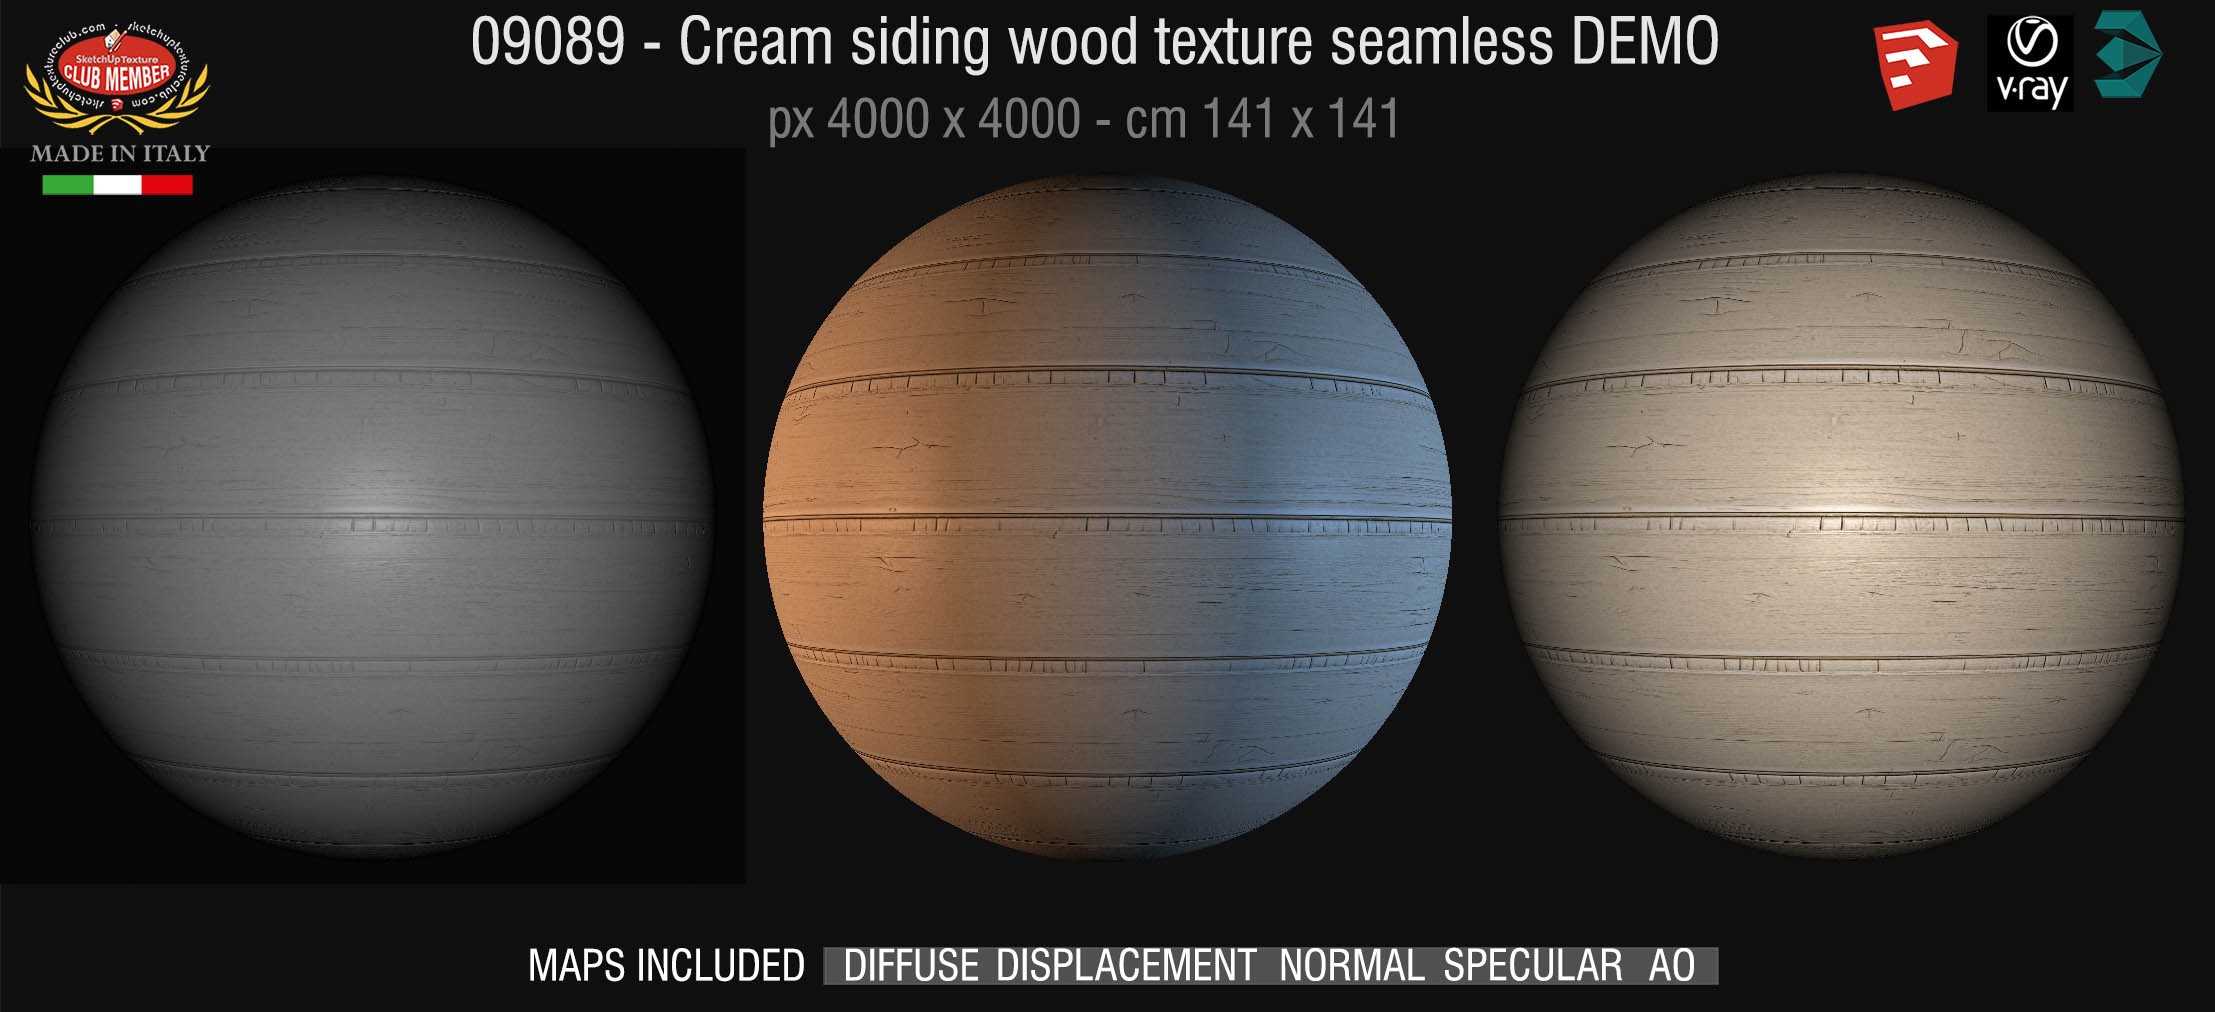 09089 Cream siding wood texture + maps DEMO